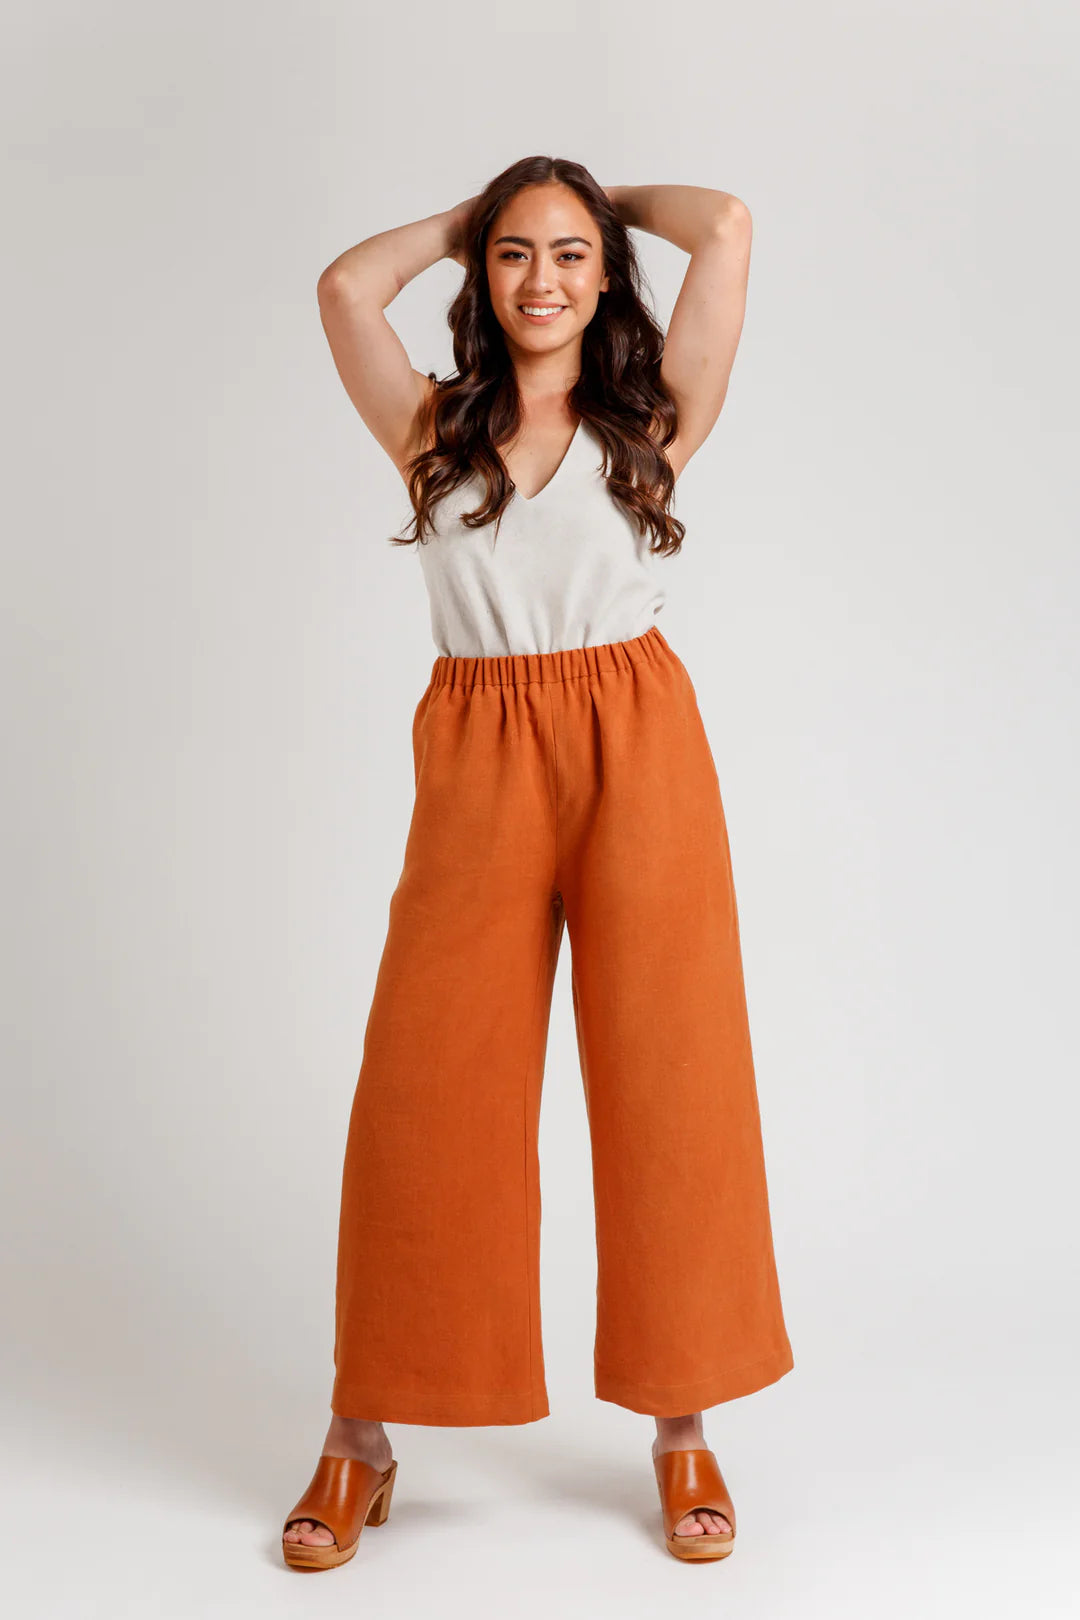 Megan Nielsen - Opal Pants and Shorts Sewing Pattern